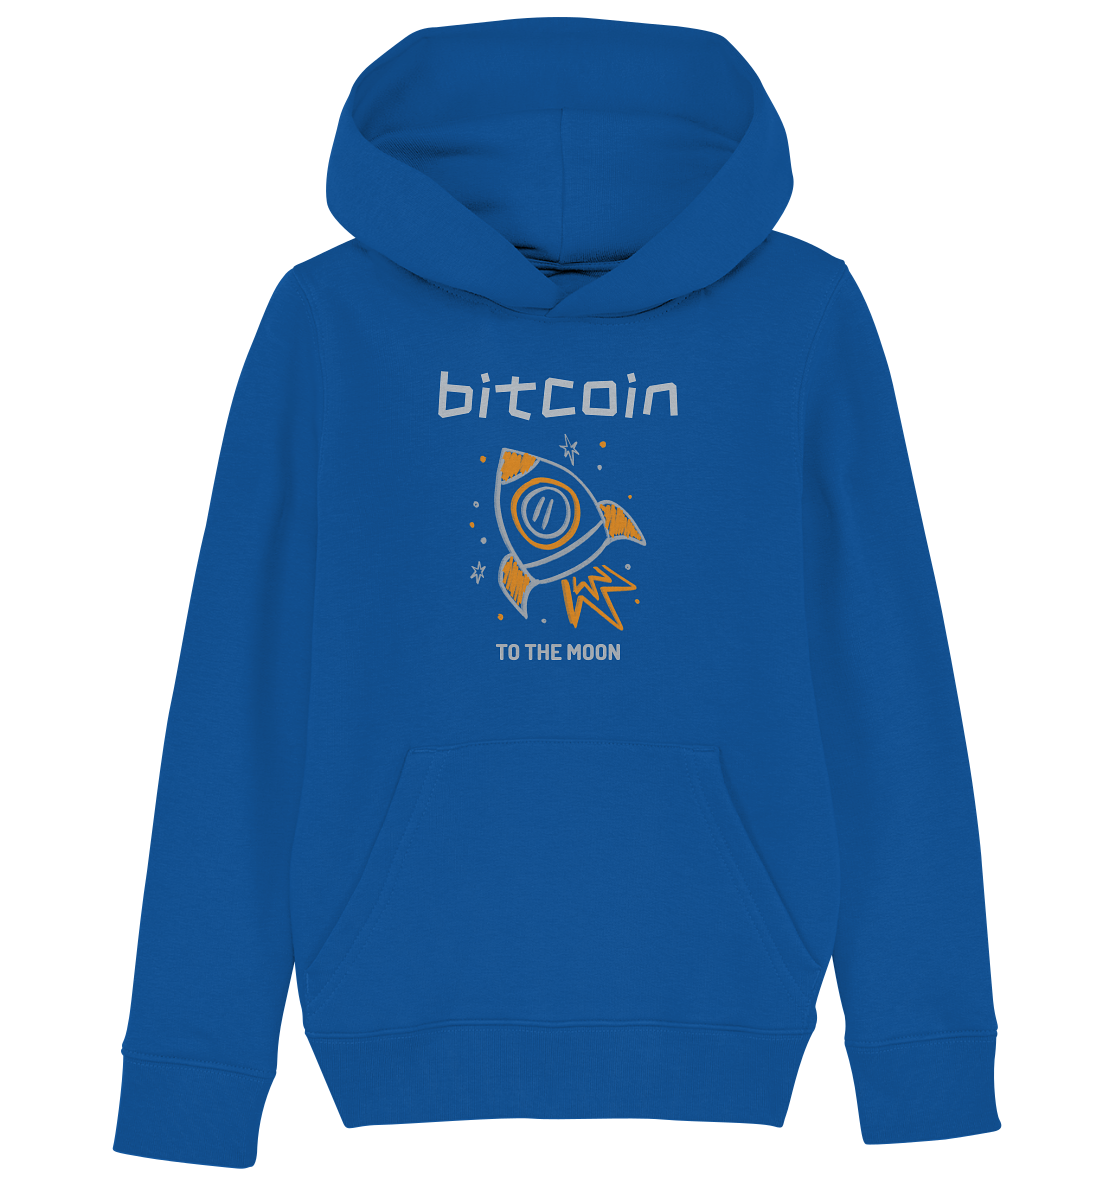 Bitcoin to the moon - Kids Organic Hoodie